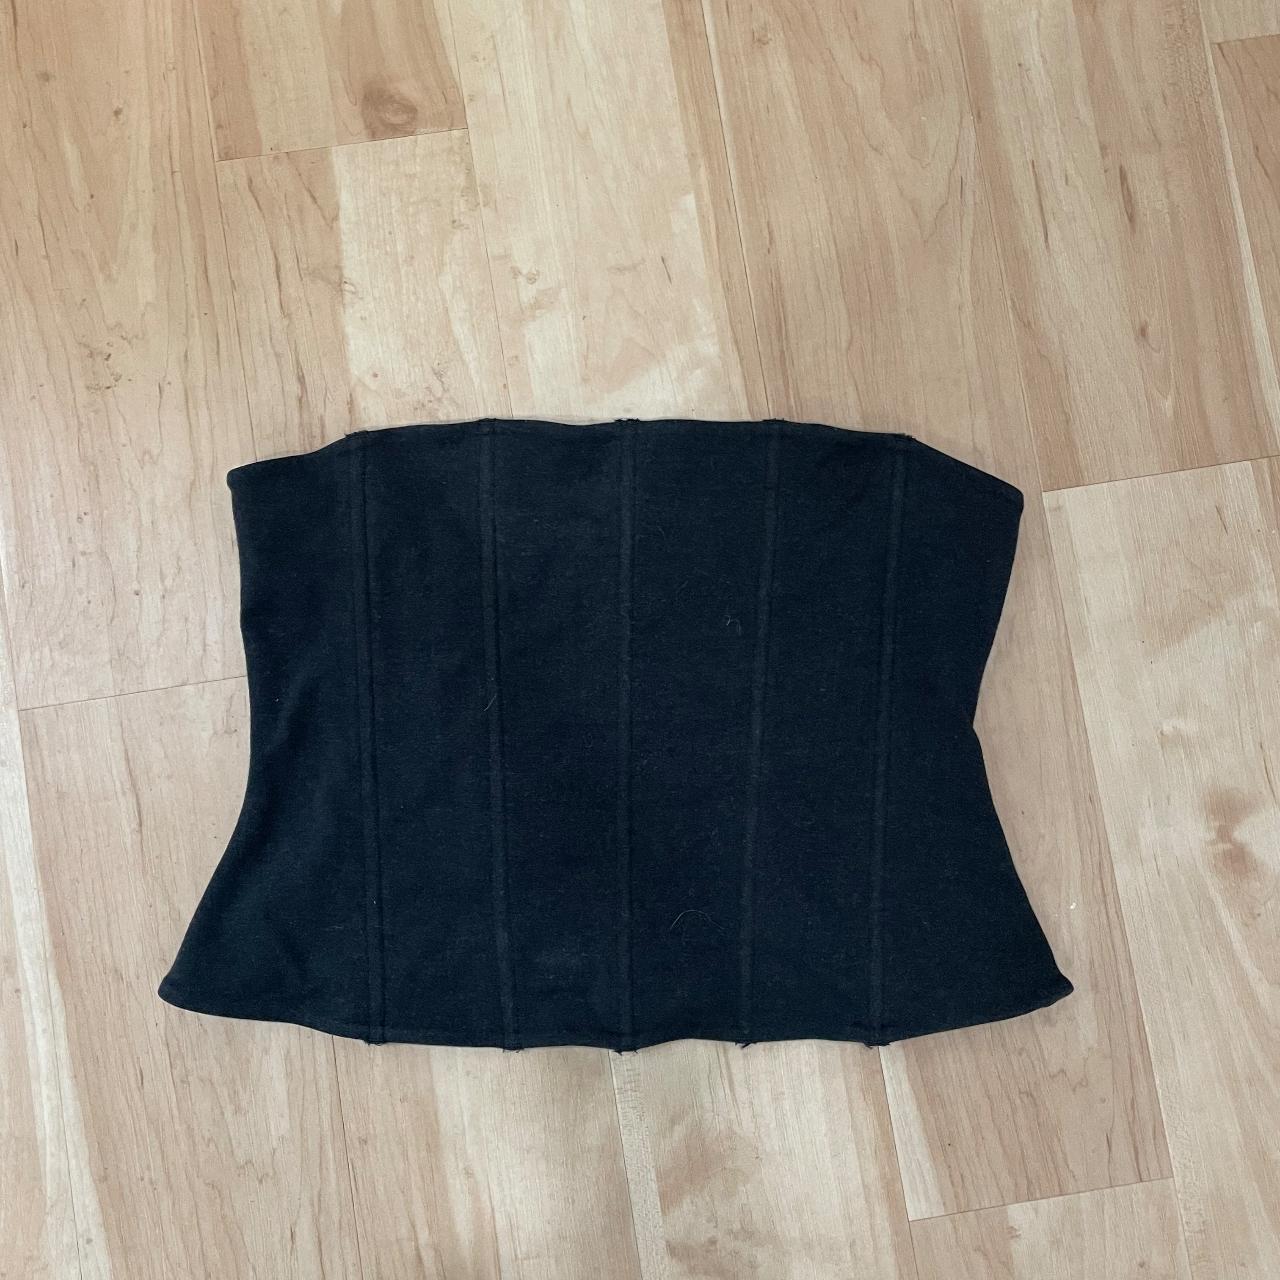 Skims cotton corset top. Color is black and it's a - Depop